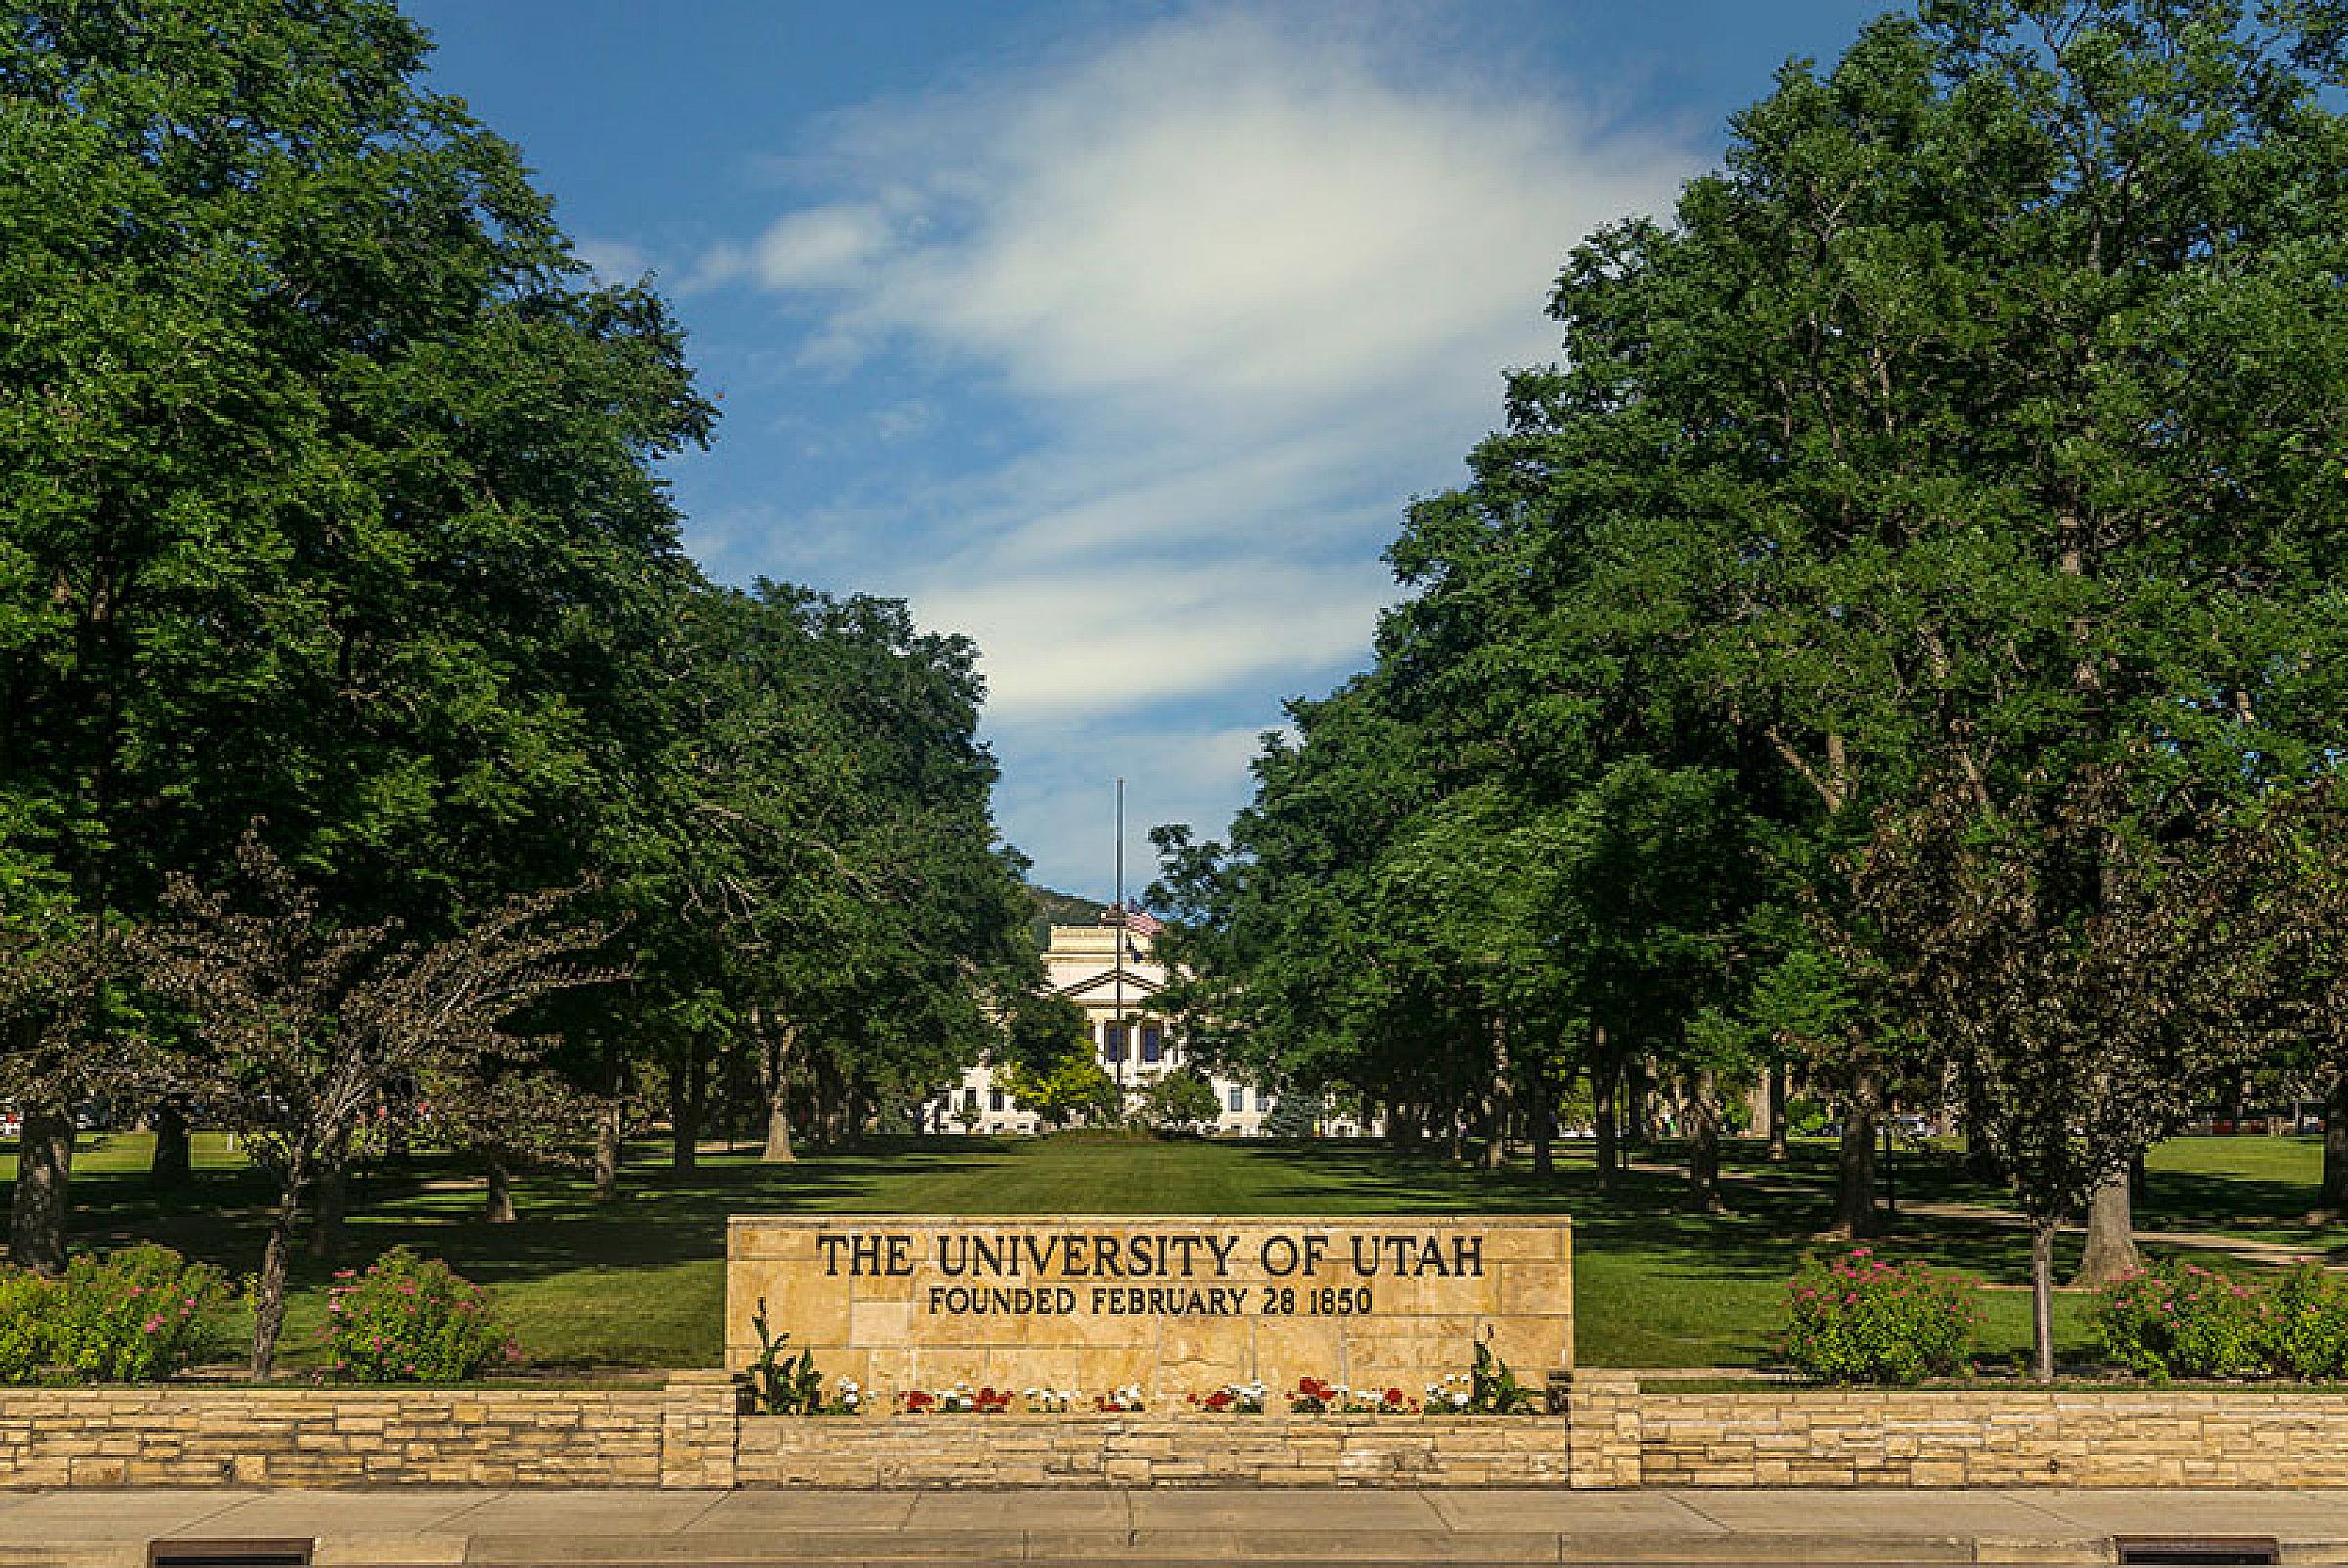 President's circle at the University of Utah campus